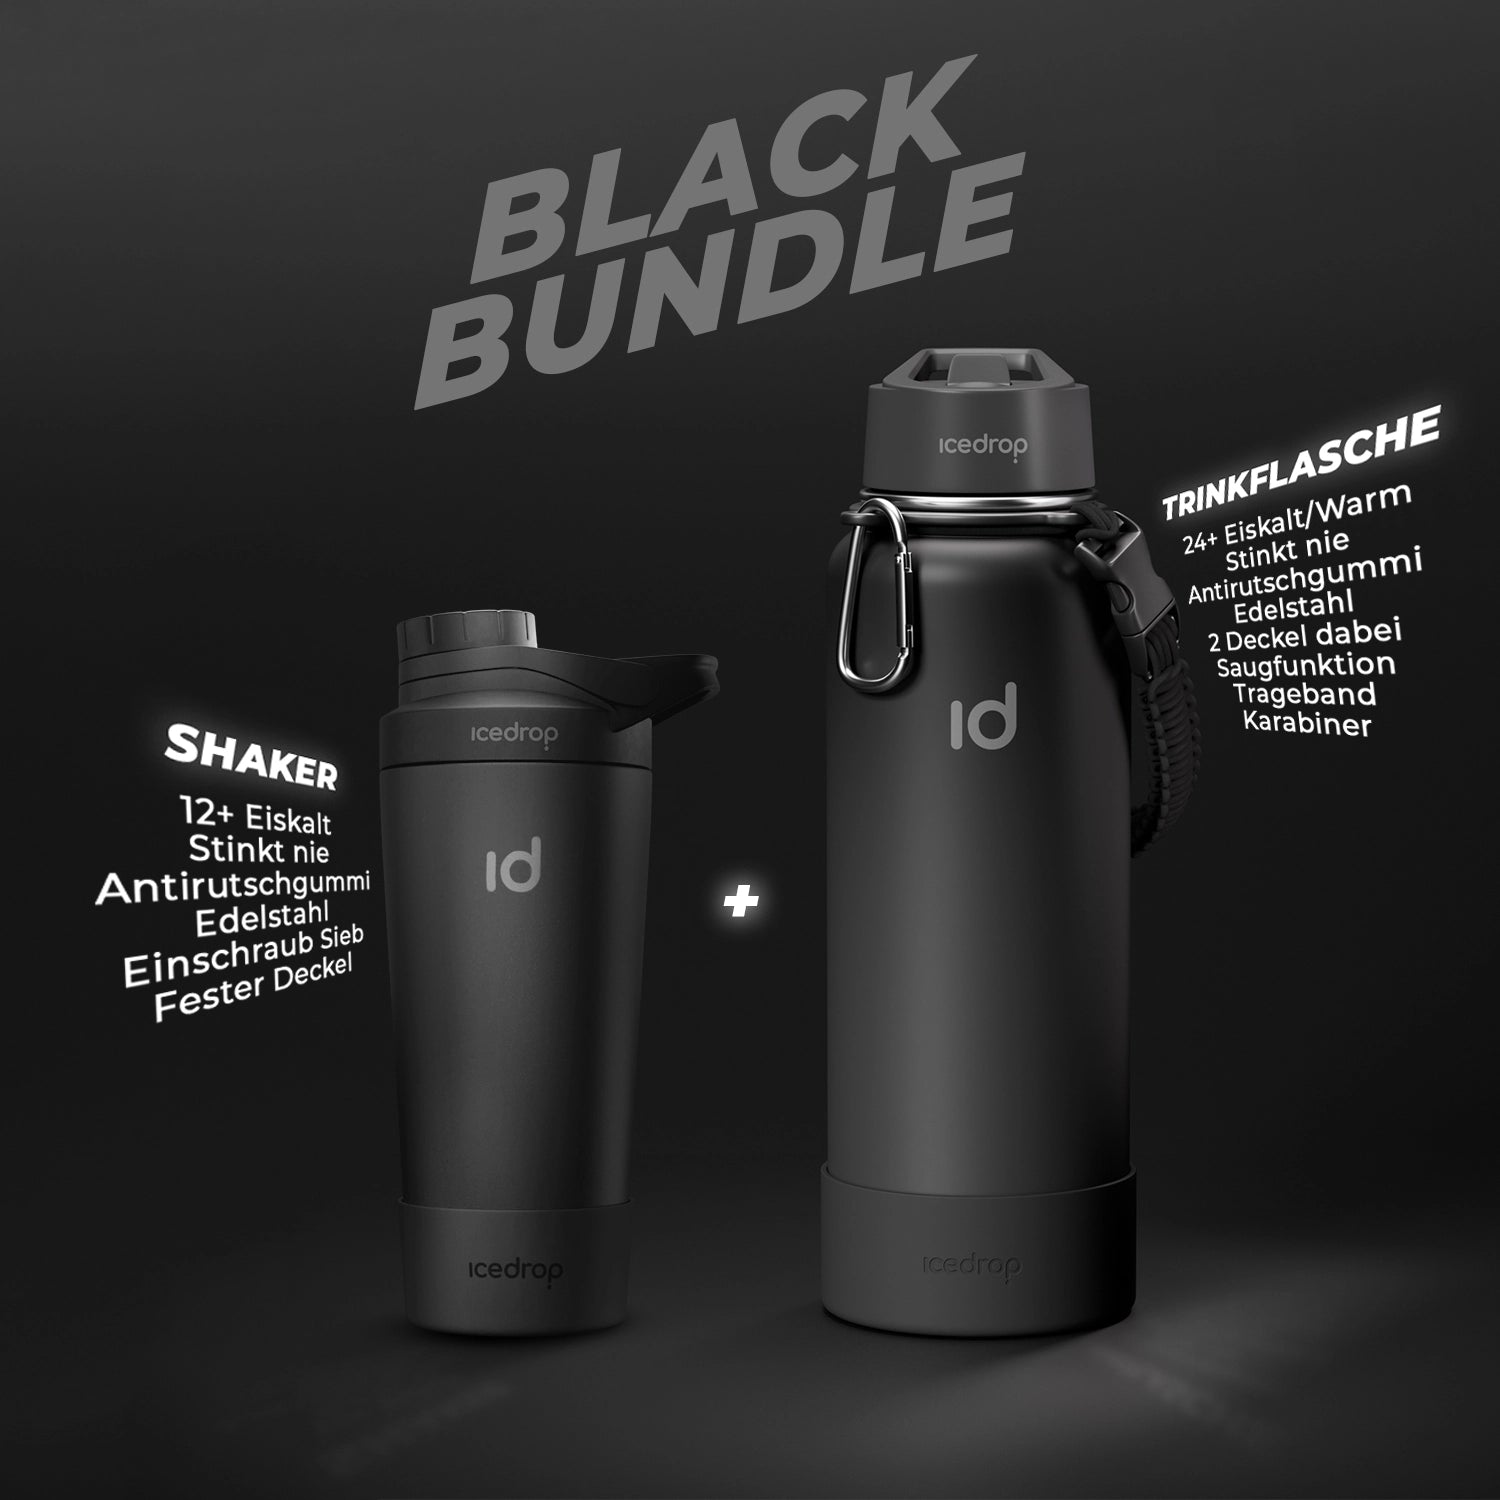 All Black Bundle | Thermonator 2.0 & Hydrohike Trinkflasche